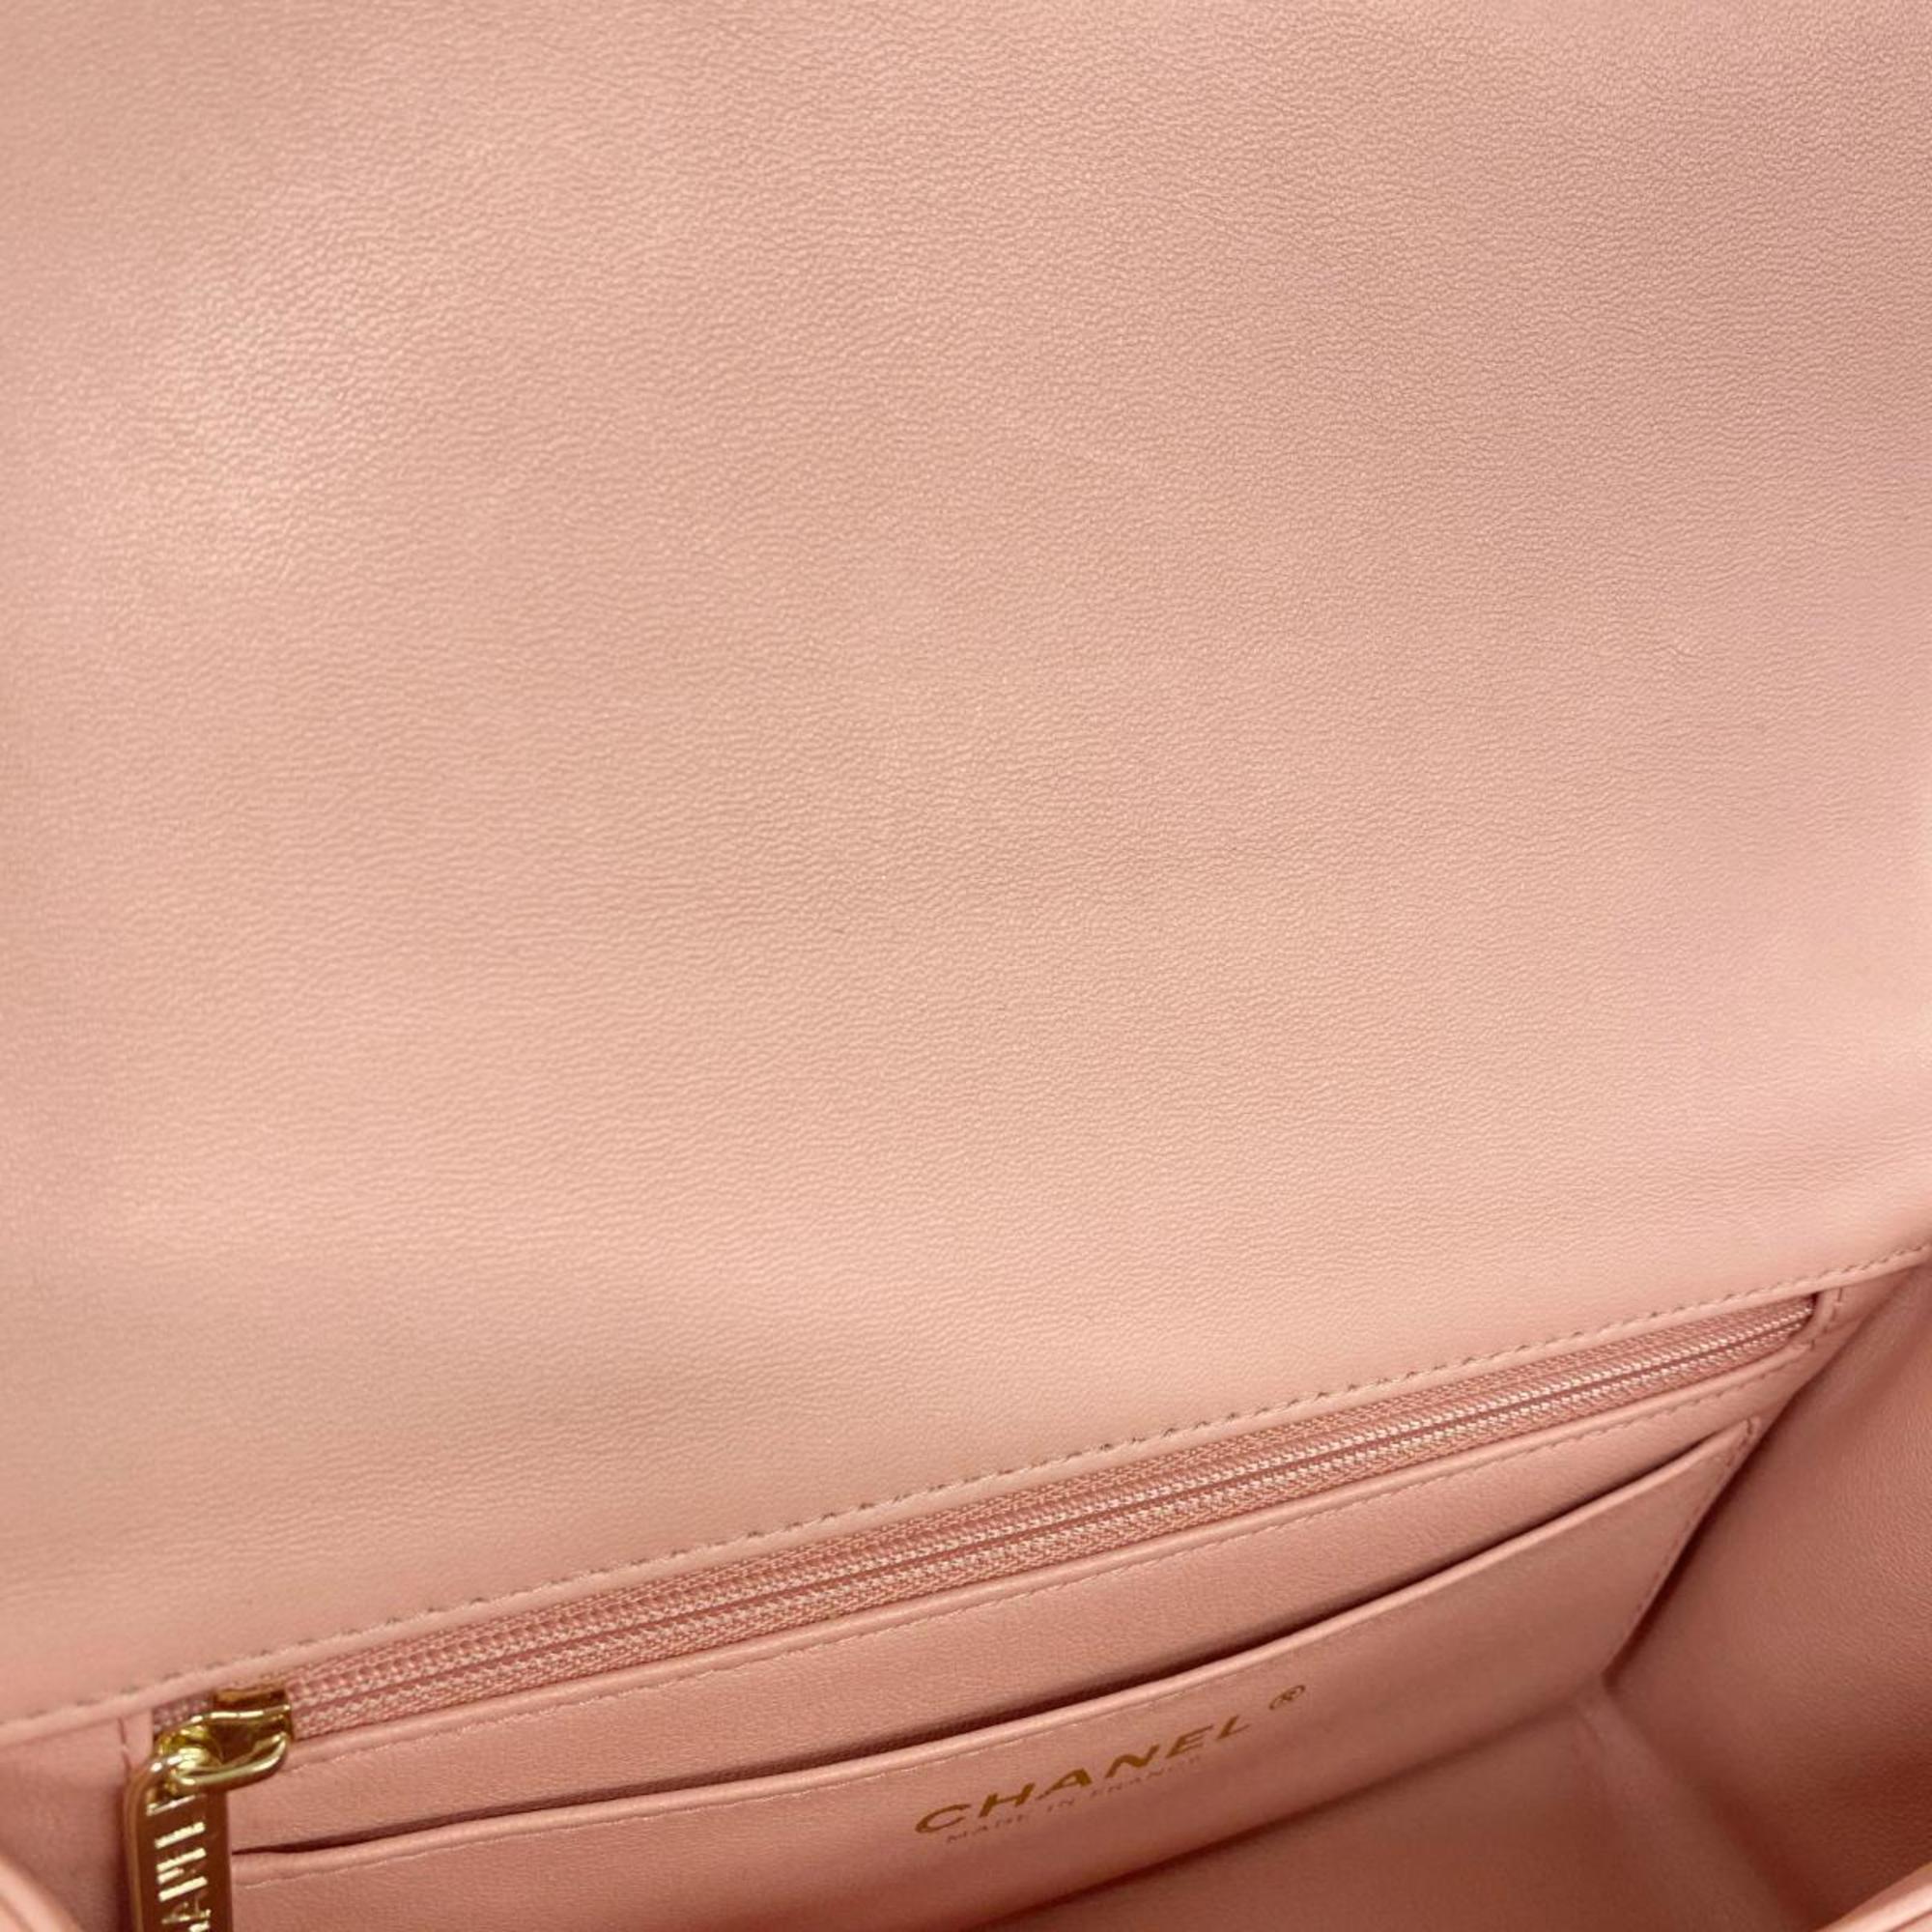 Chanel handbag, Matelasse, chain shoulder, lambskin, pink, ladies